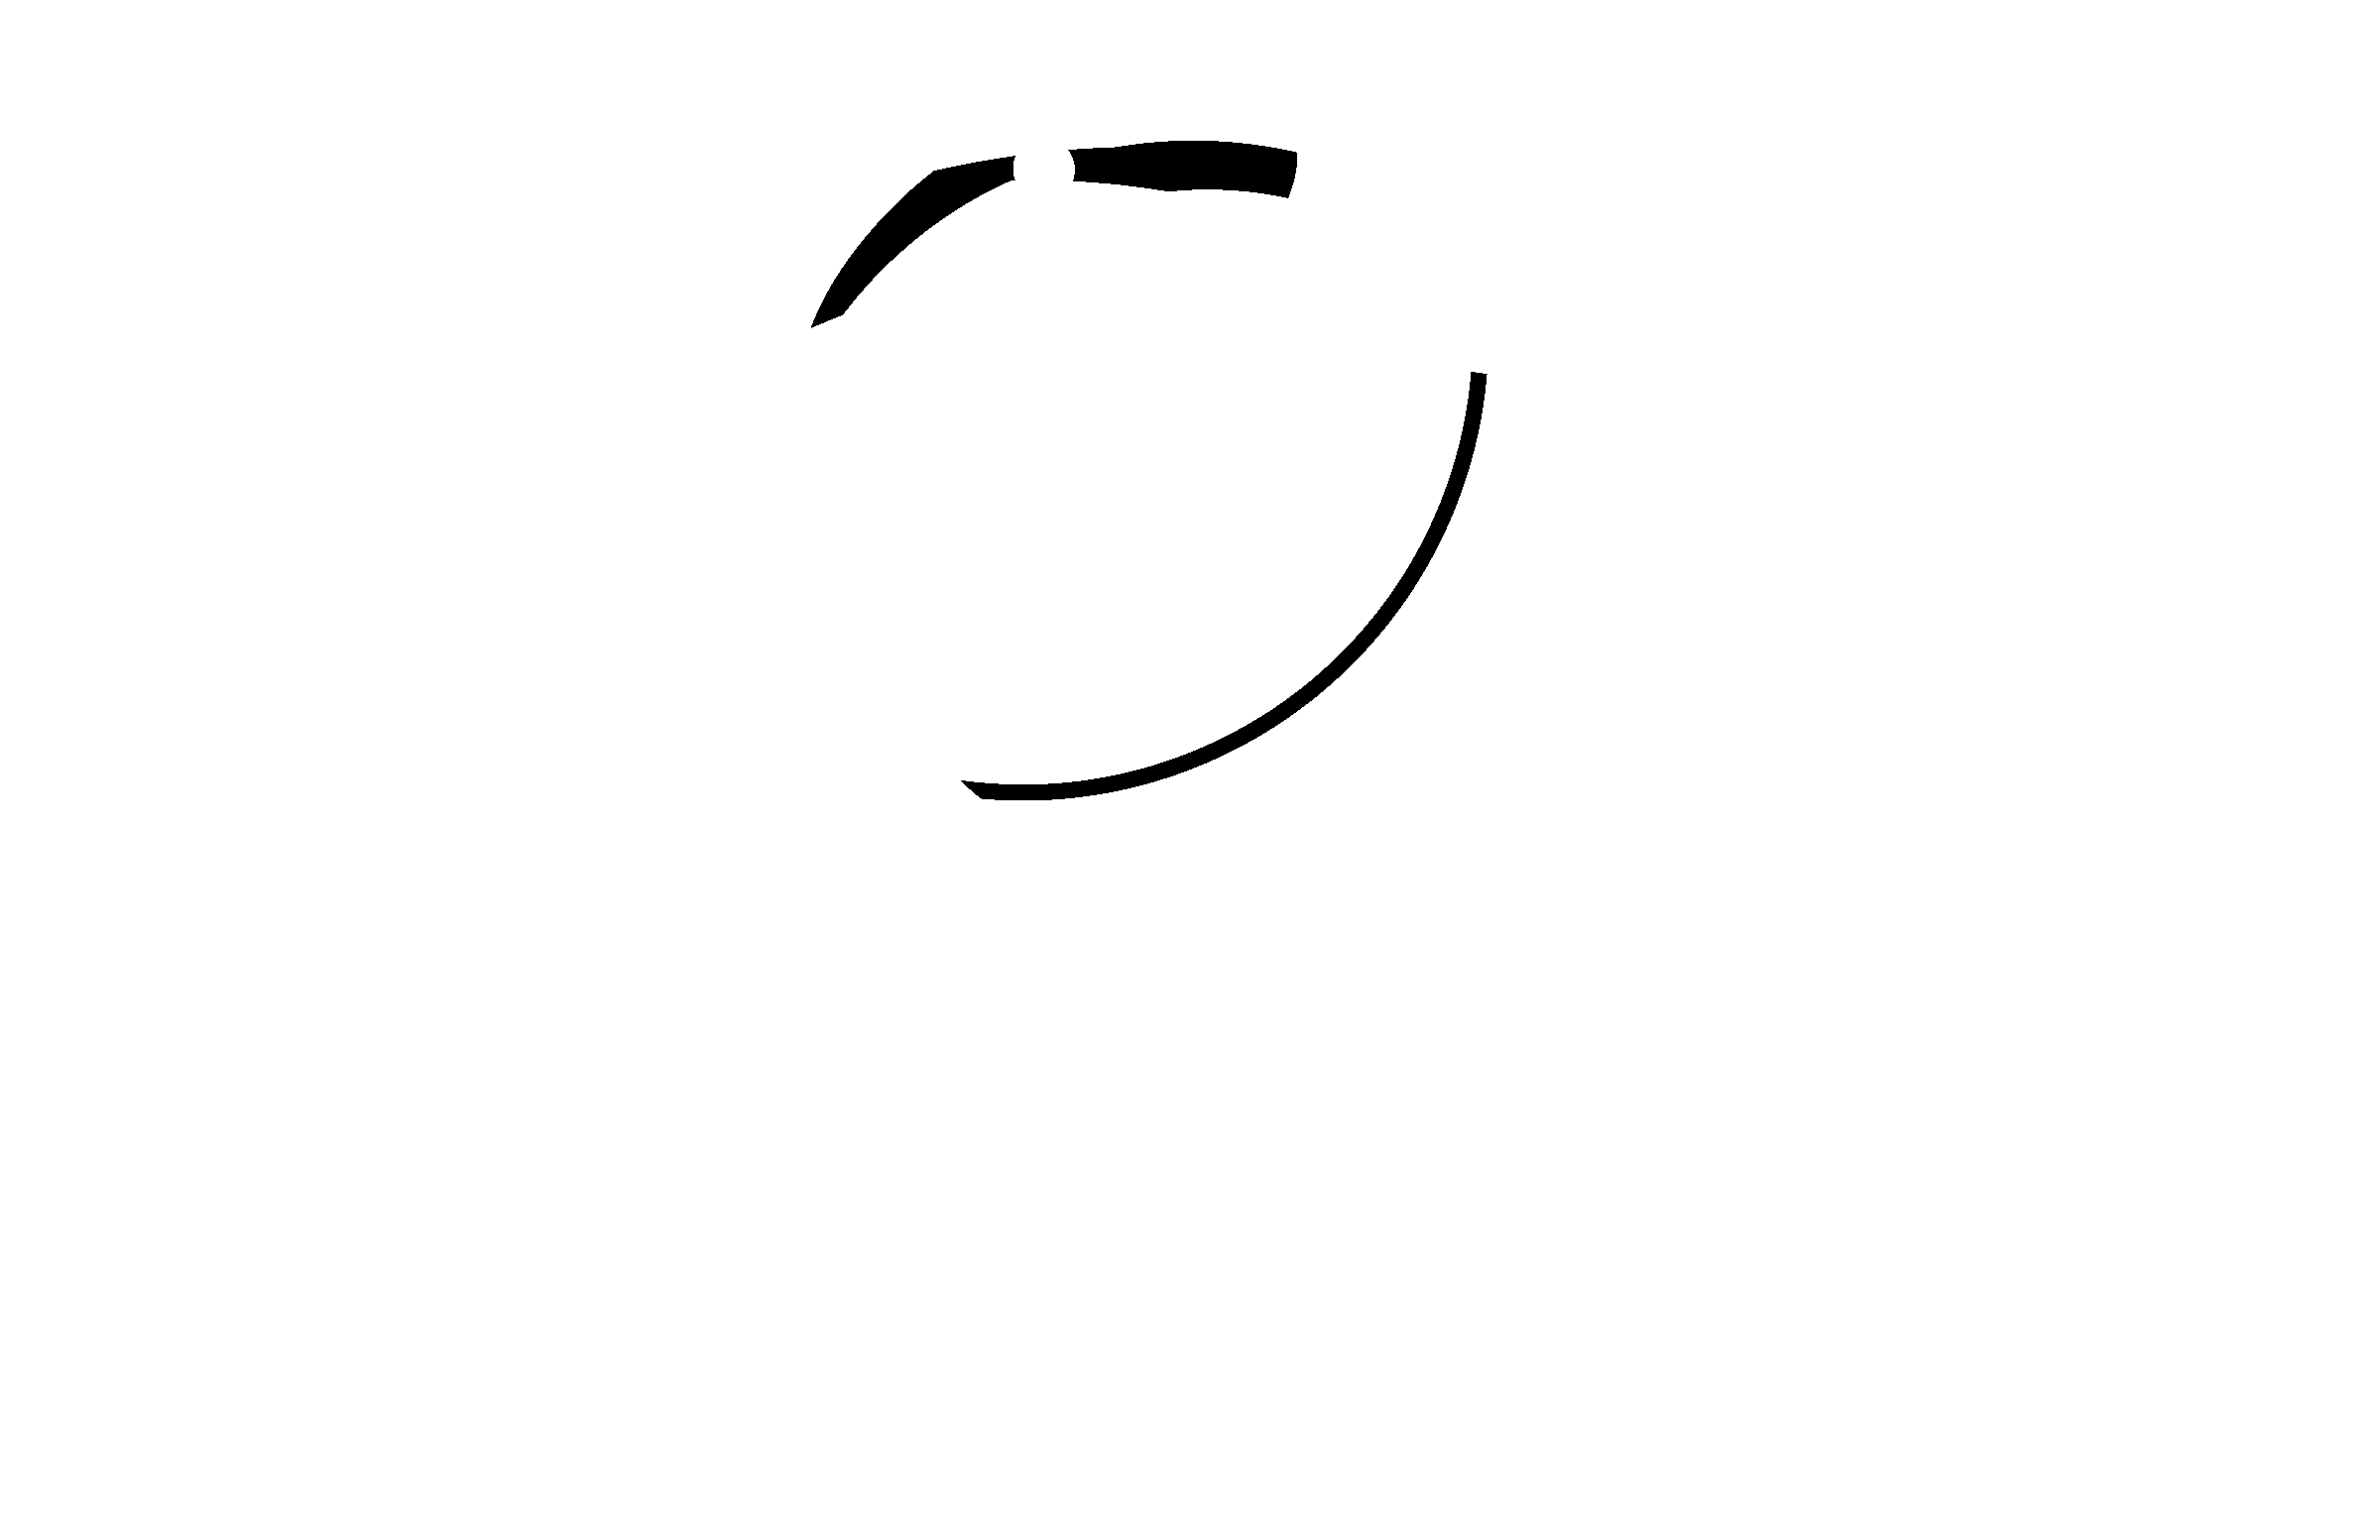 Ericcson Logo - Sony Ericsson Logo PNG Transparent & SVG Vector - Freebie Supply